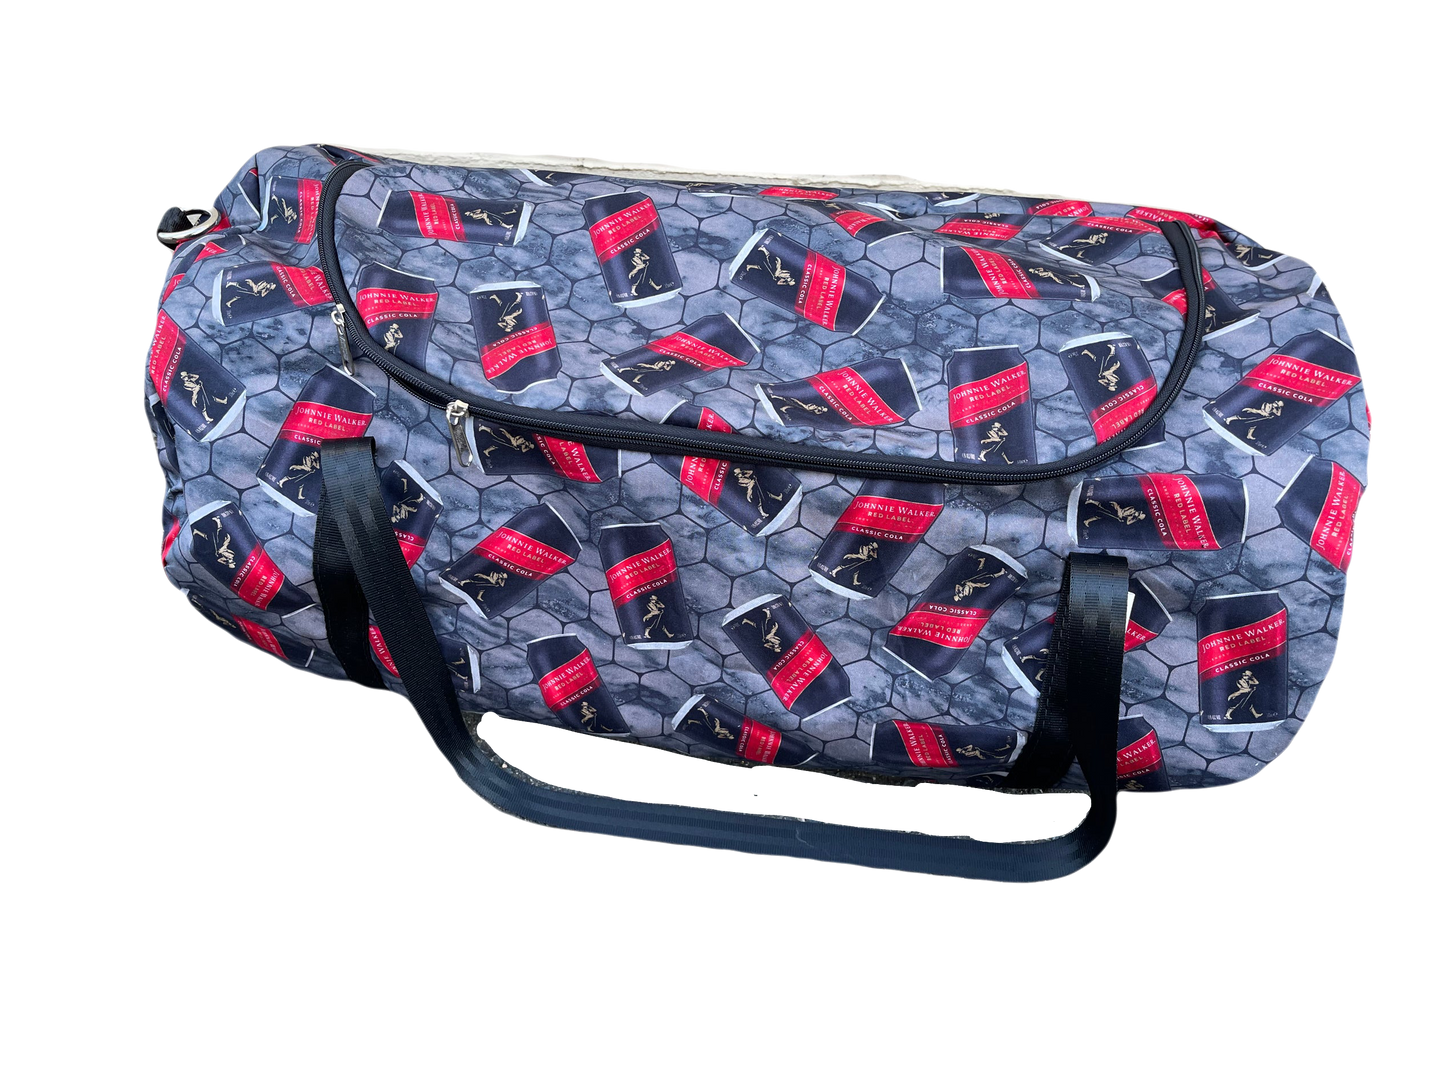 Fabric Duffle Bag - Johnnie walker